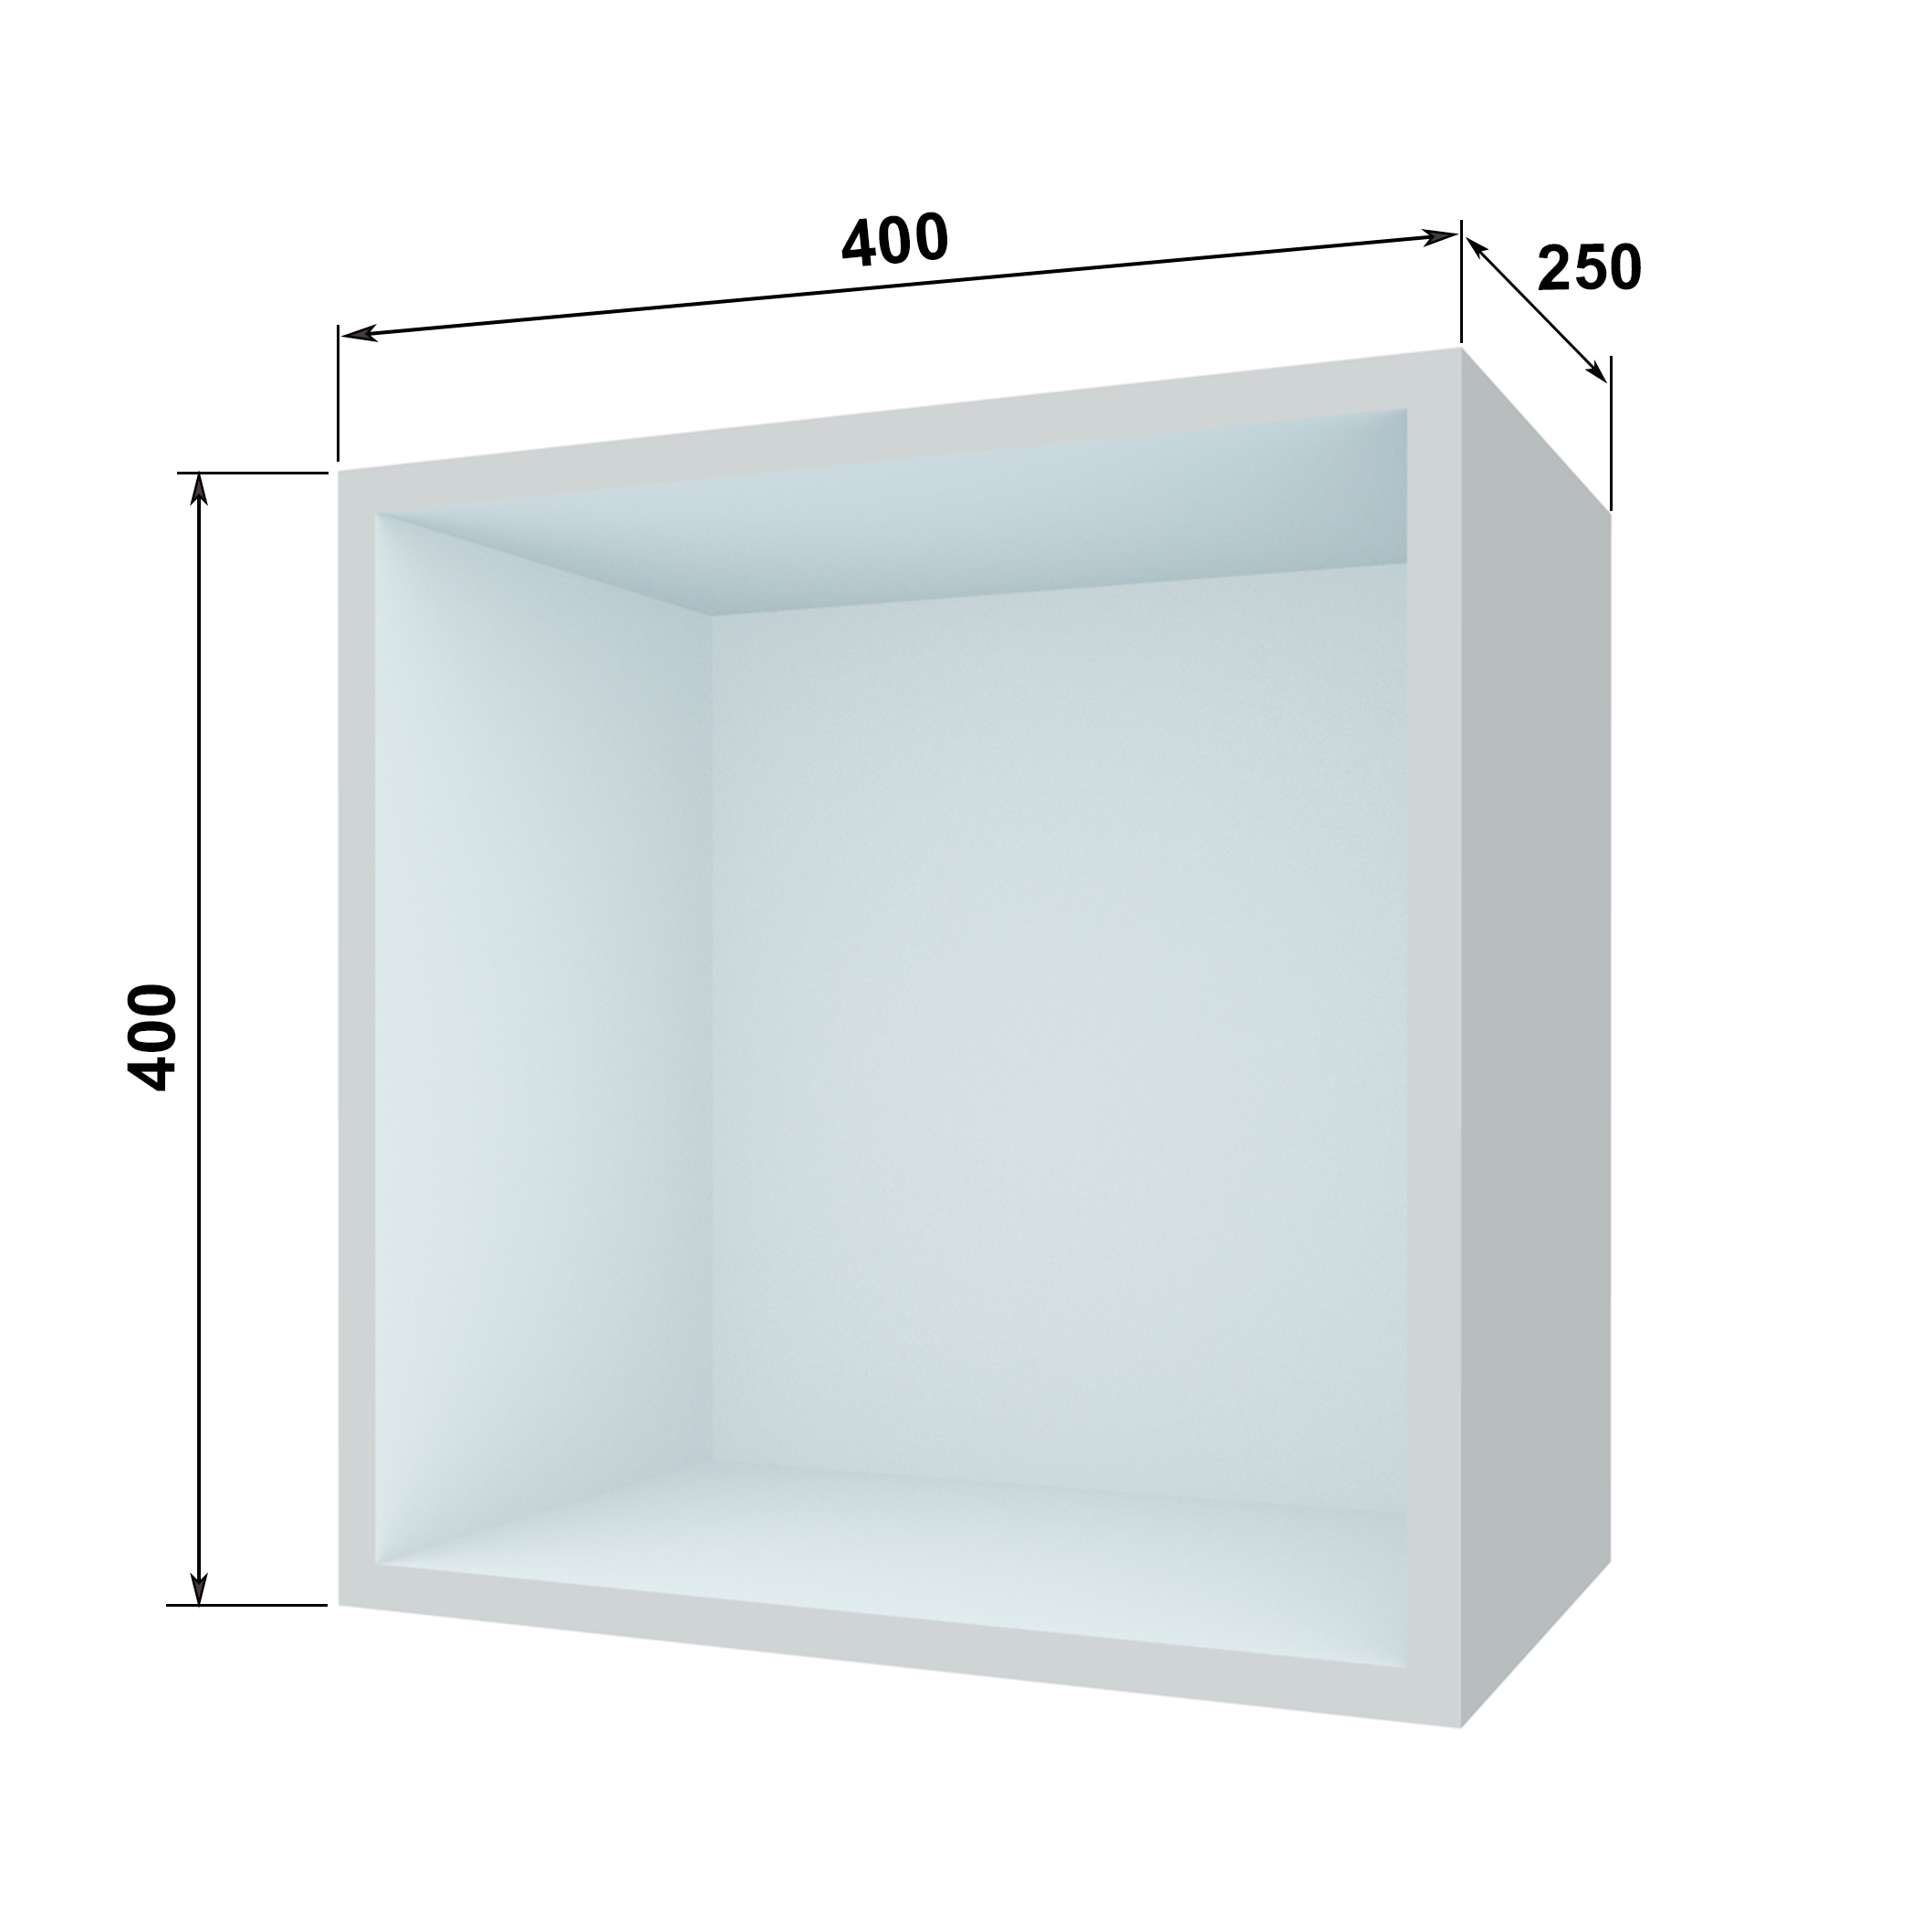 Shelf 400mm x 400mm x 250mm, White body, Back Panel MDF - foto 2